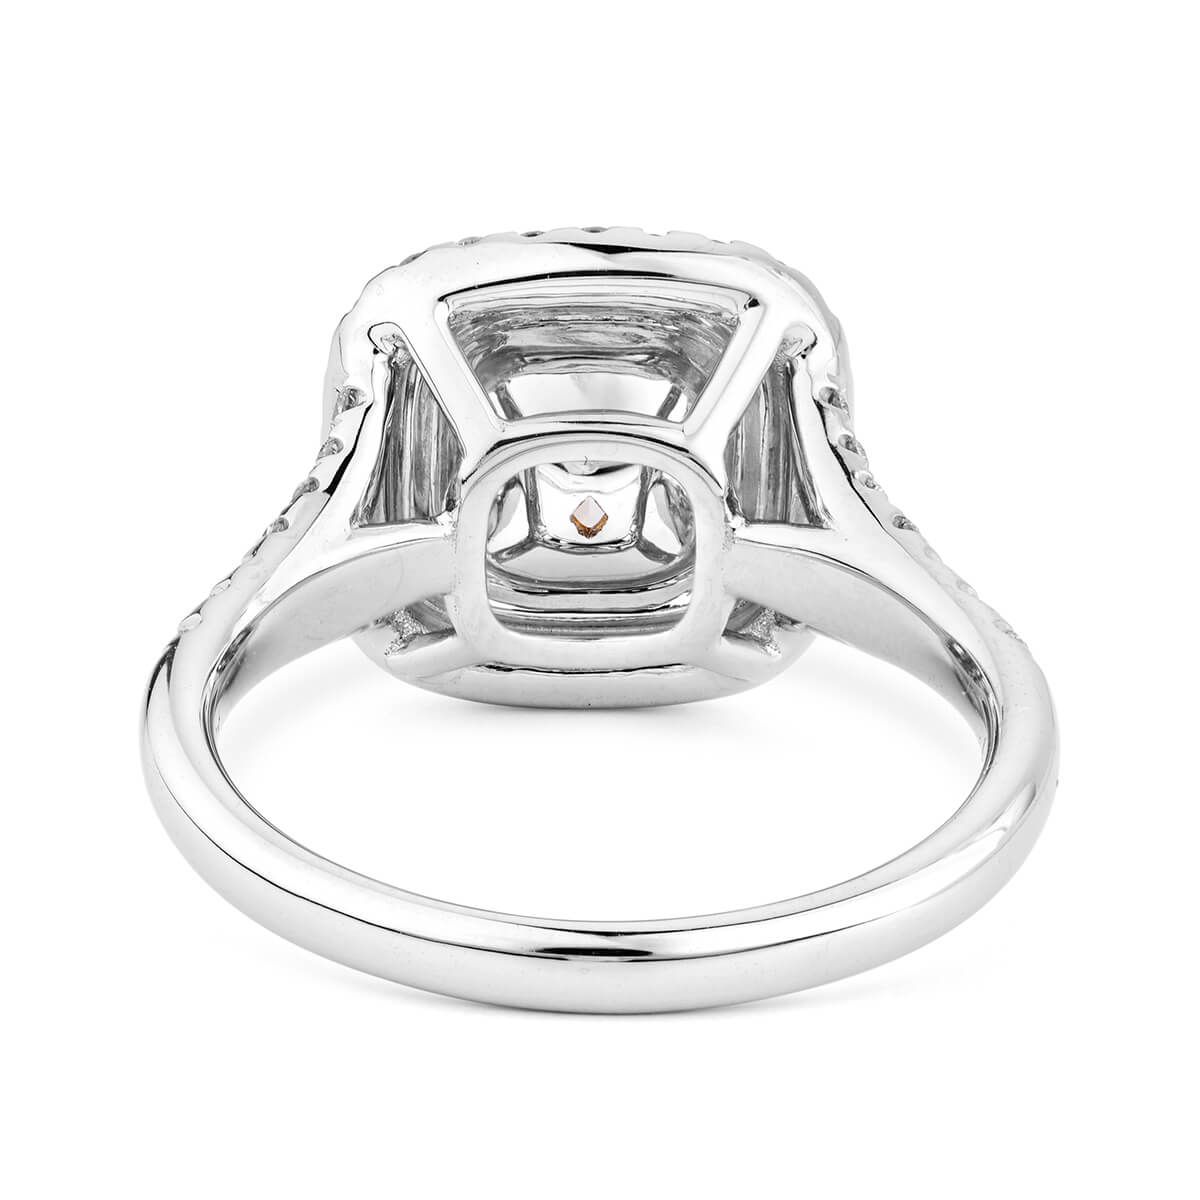 Fancy Light Yellow Diamond Ring, 1.54 Ct. (2.11 Ct. TW), Cushion shape, GIA Certified, 7228739307